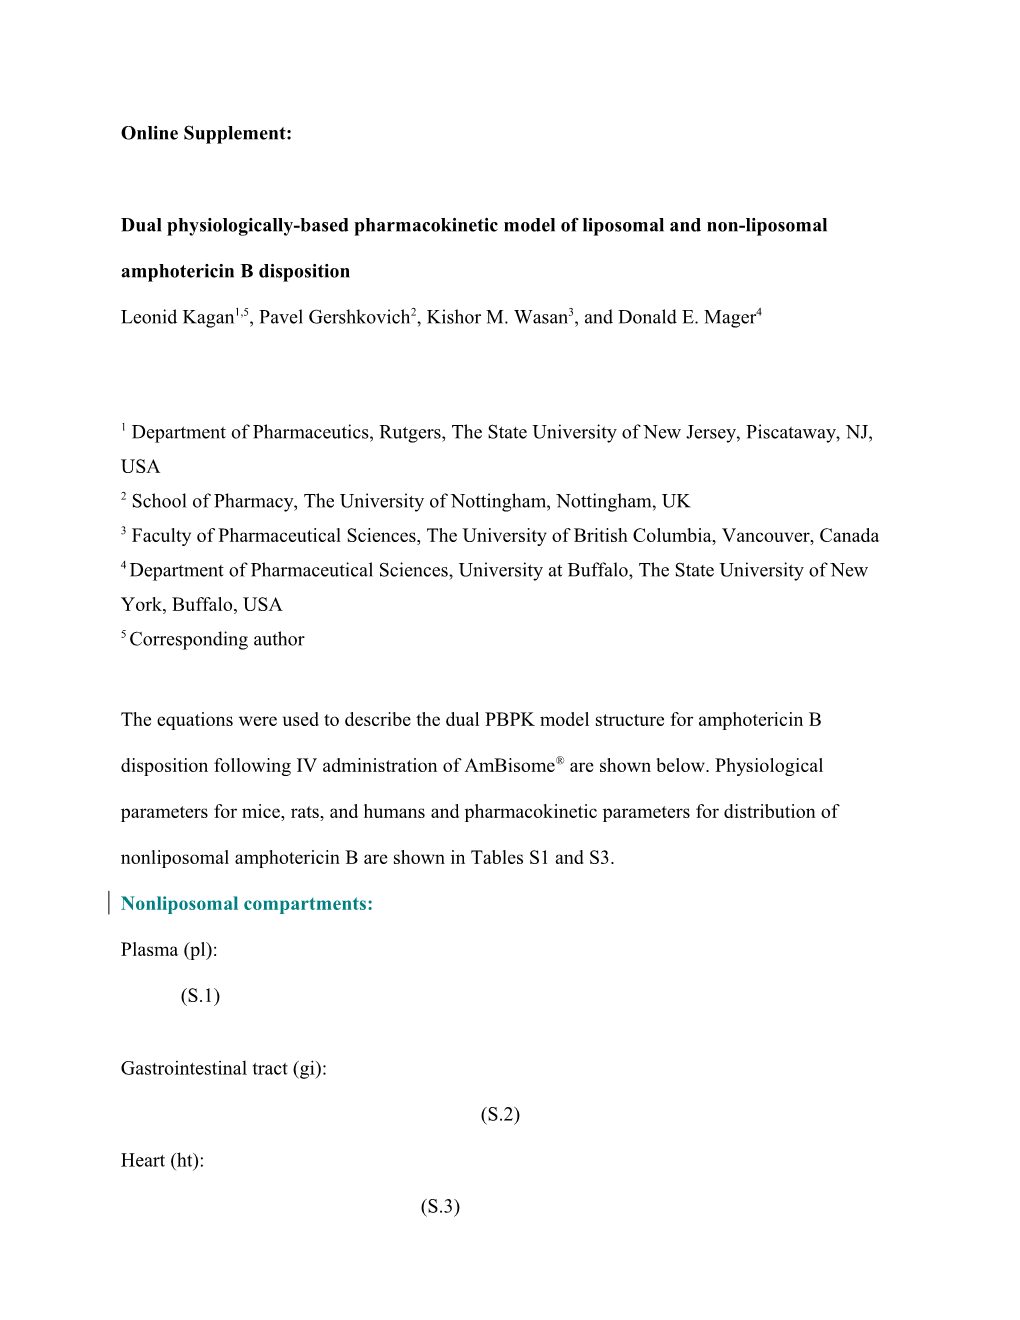 Dual Physiologically-Based Pharmacokinetic Model of Liposomal and Non-Liposomal Amphotericin